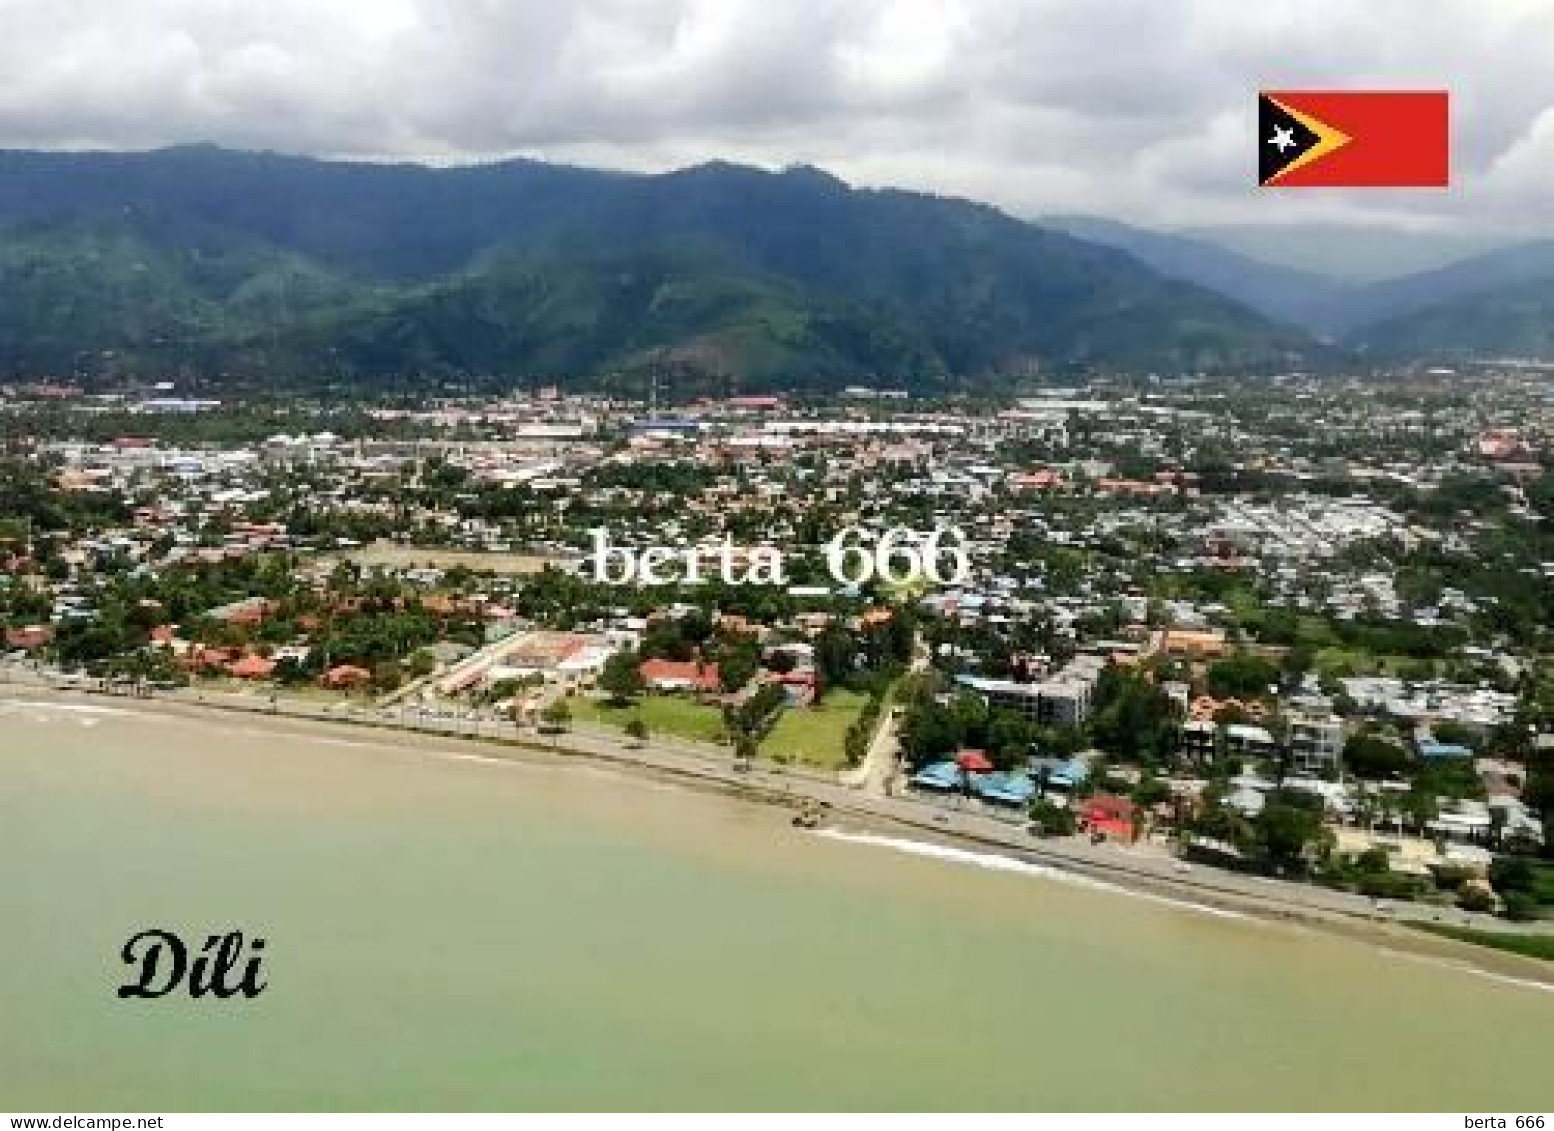 East Timor Dili Aerial View New Postcard - East Timor